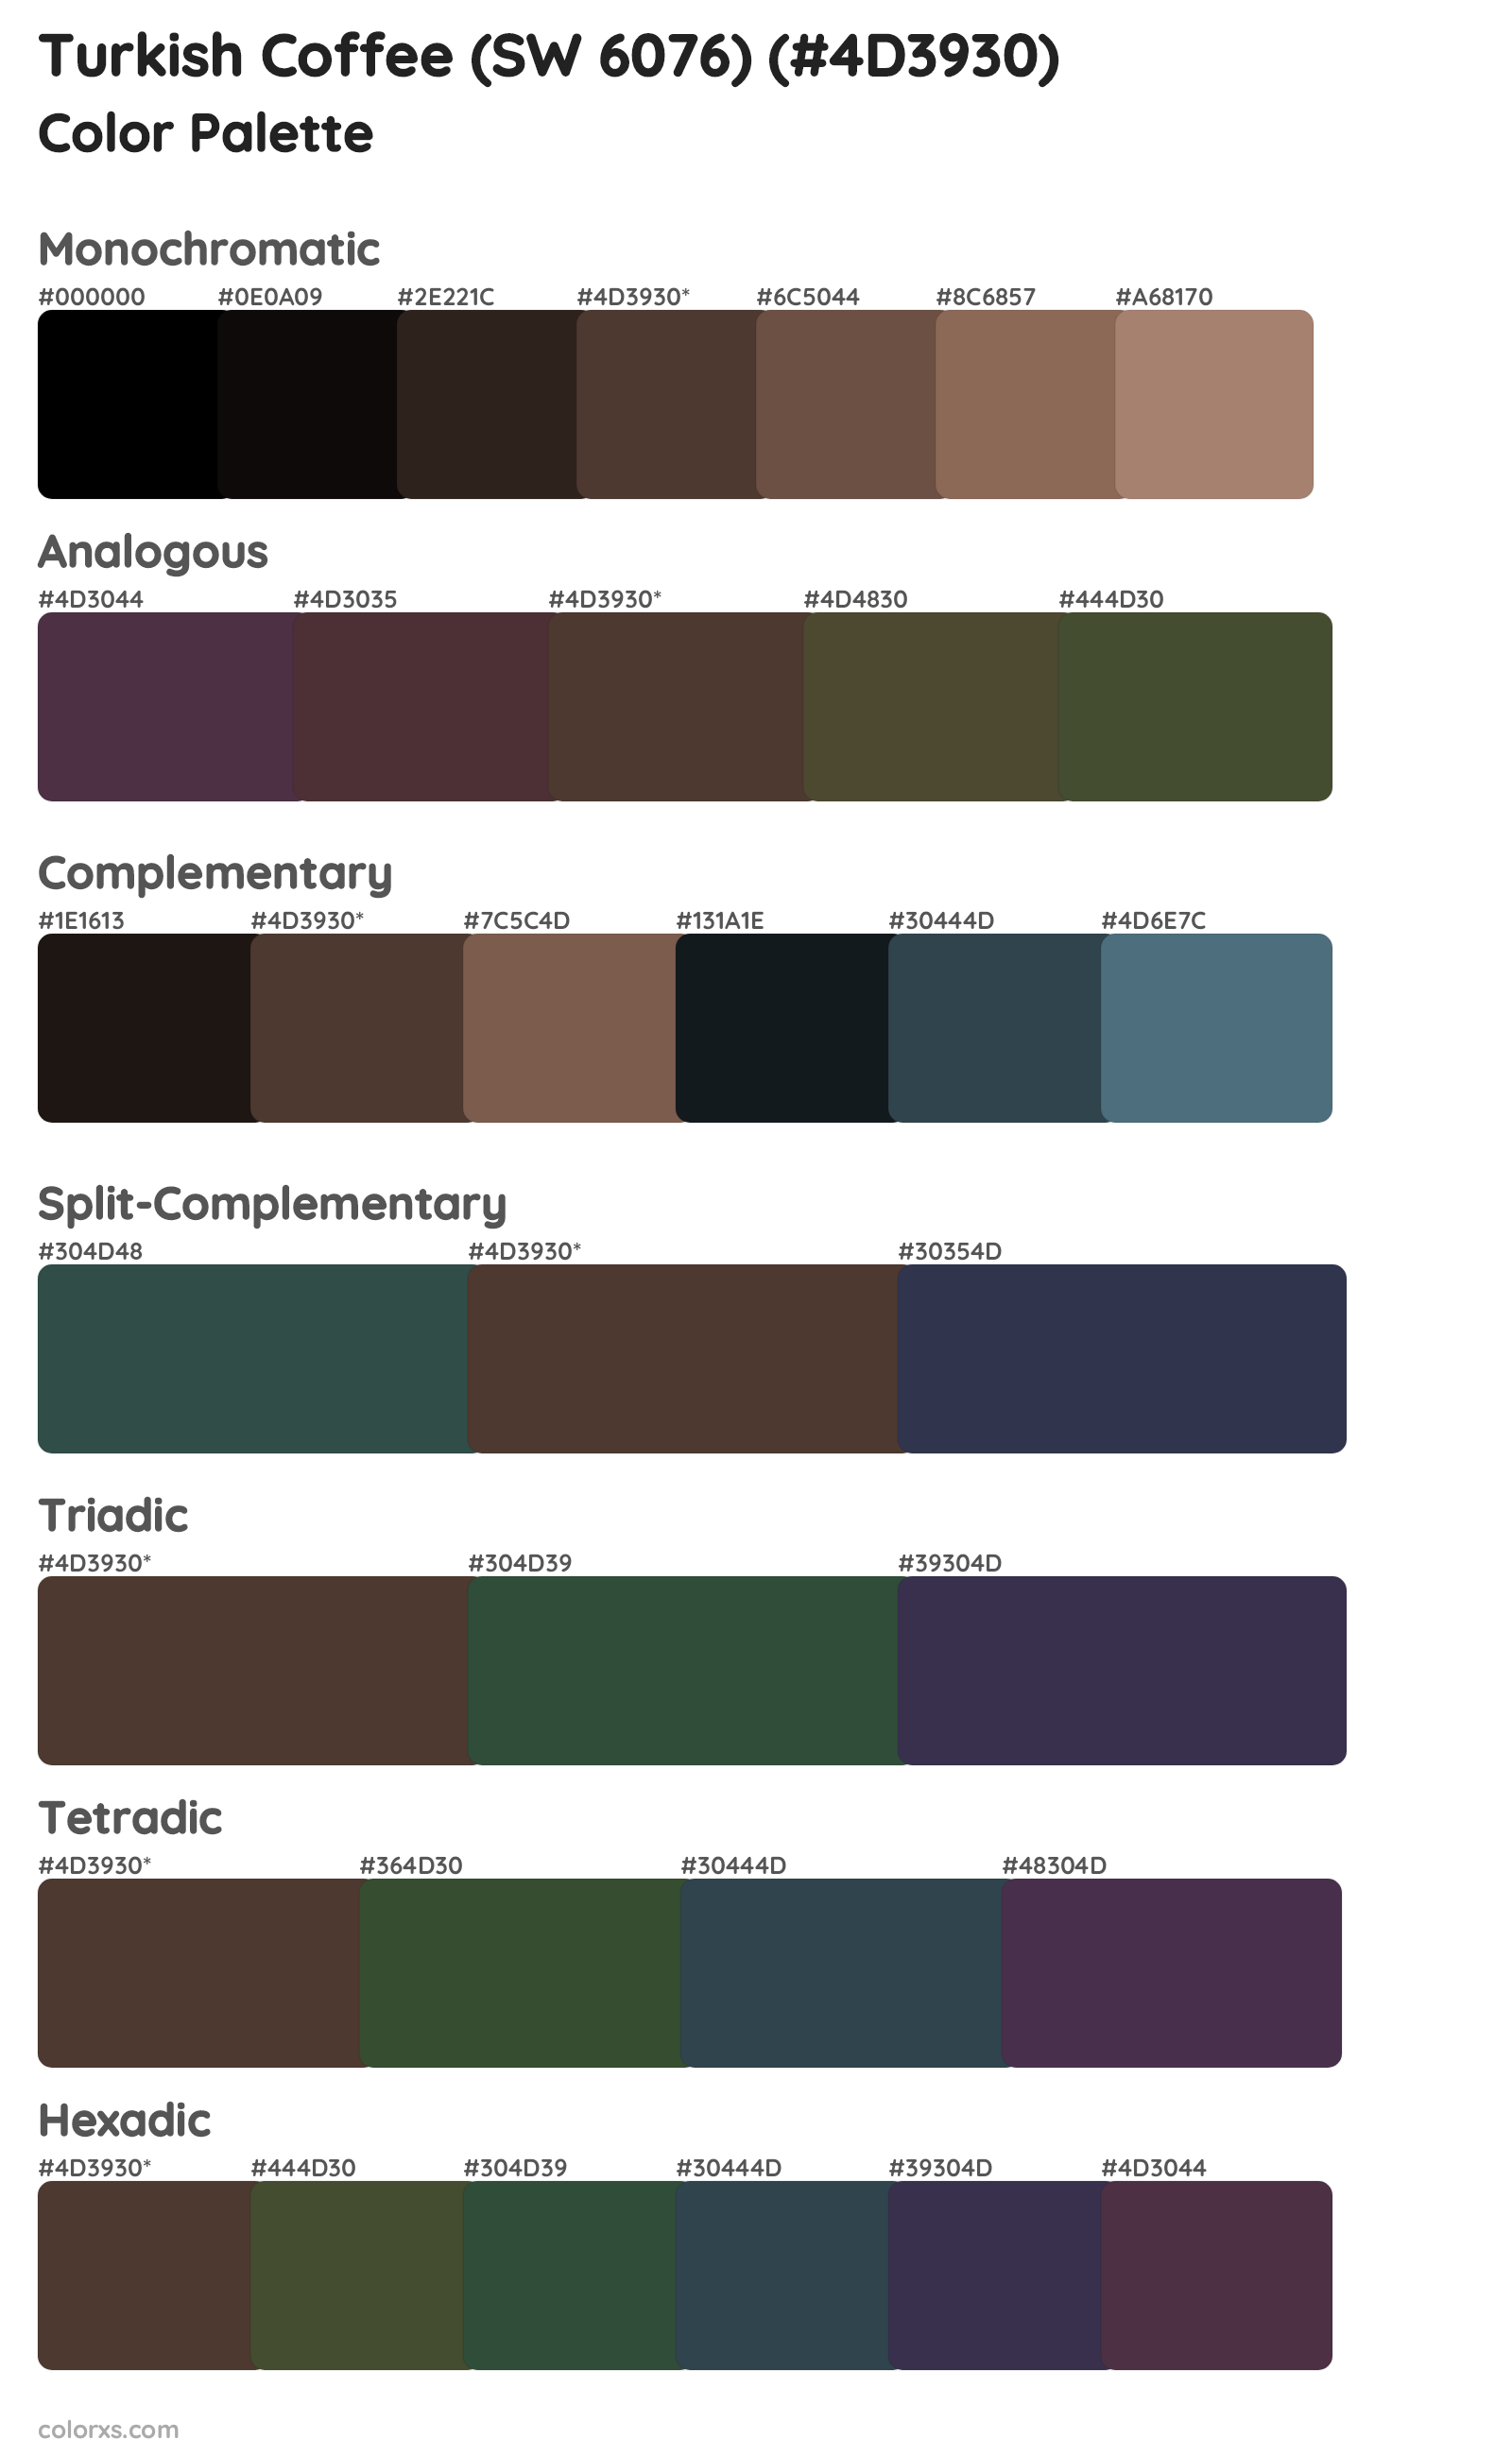 Turkish Coffee (SW 6076) Color Scheme Palettes